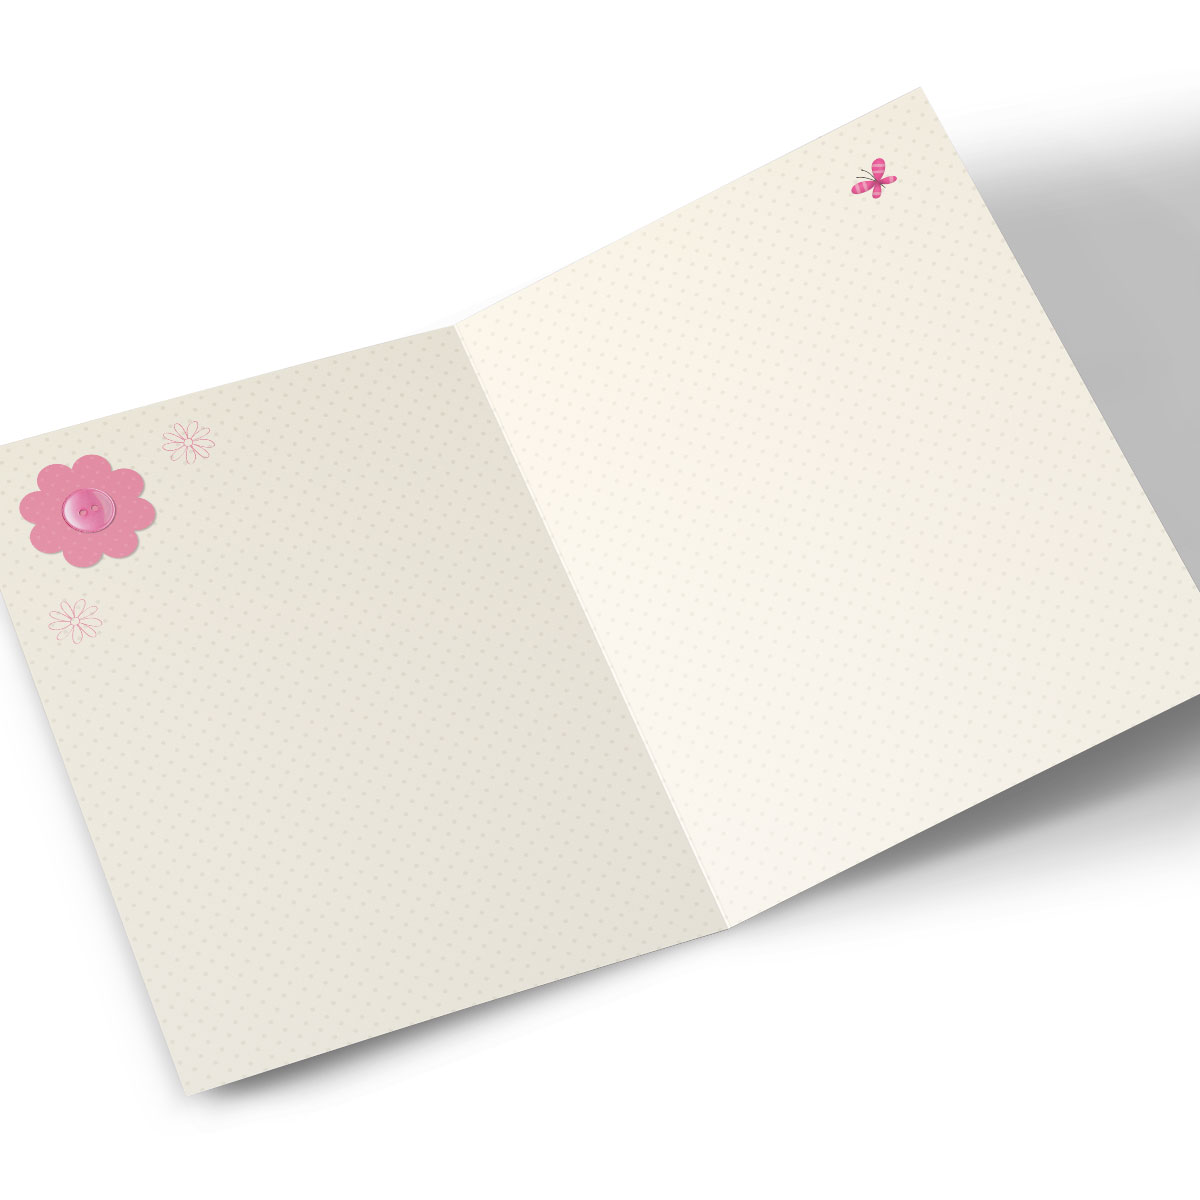 Personalised Hugs Bear Card - Flower, With Love